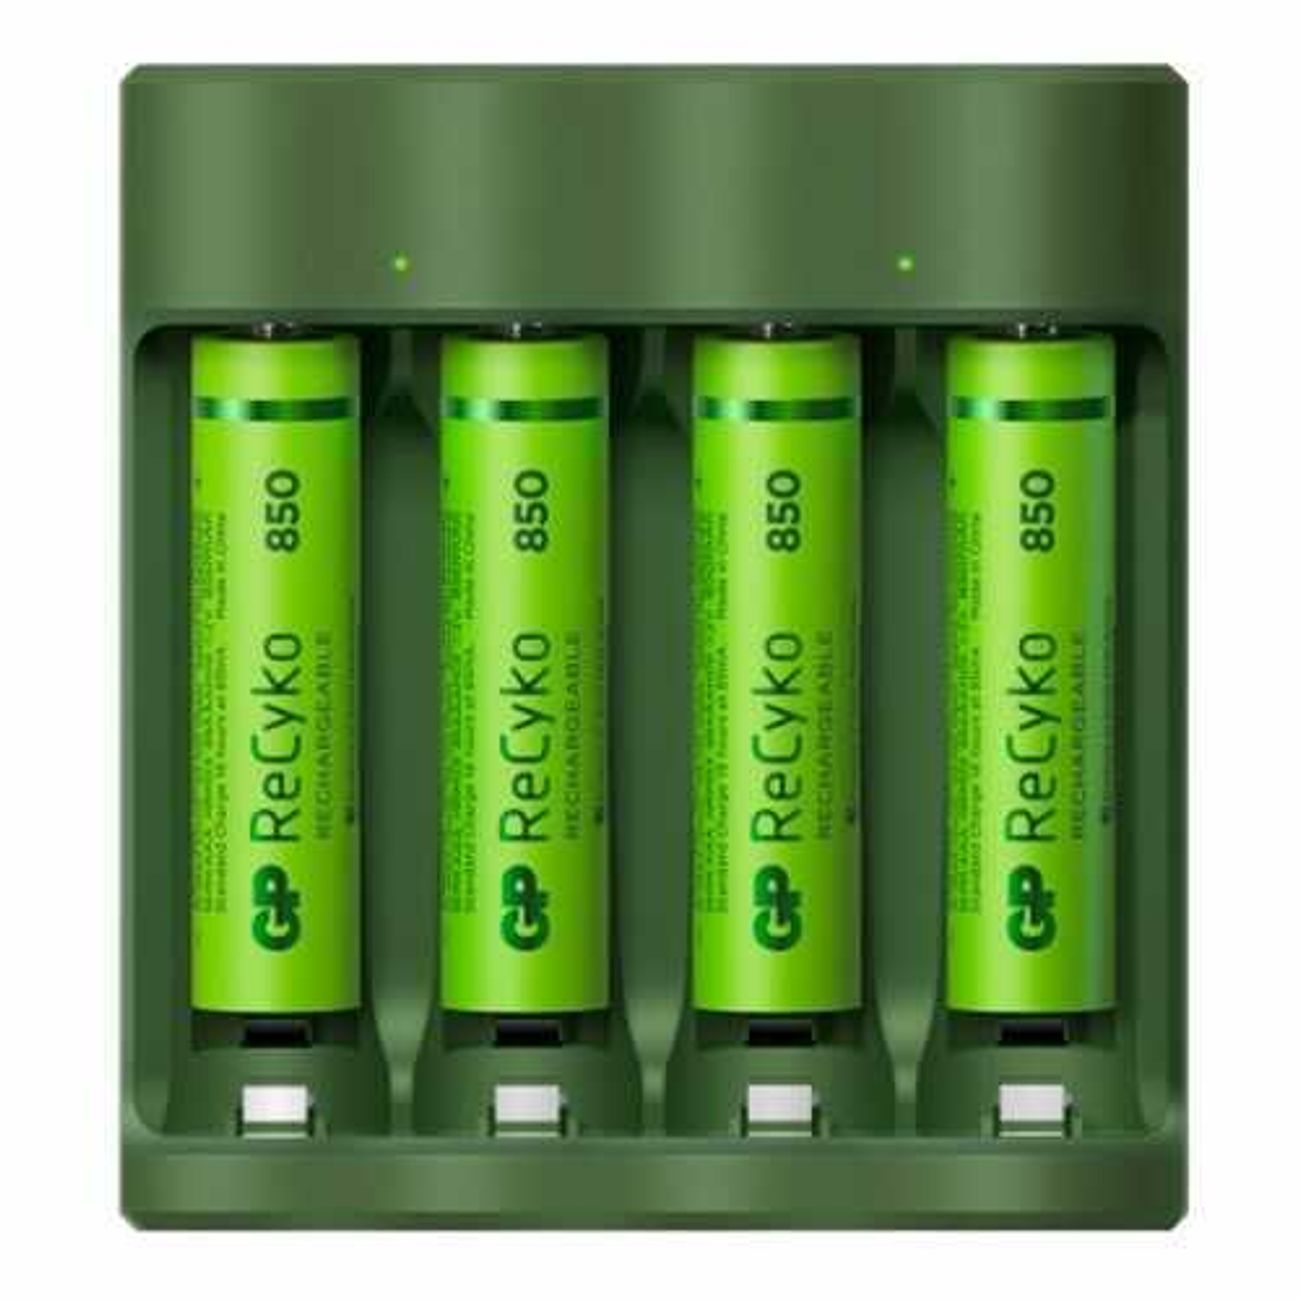 gp-recyko-everyday-batteriladdare-73181-4